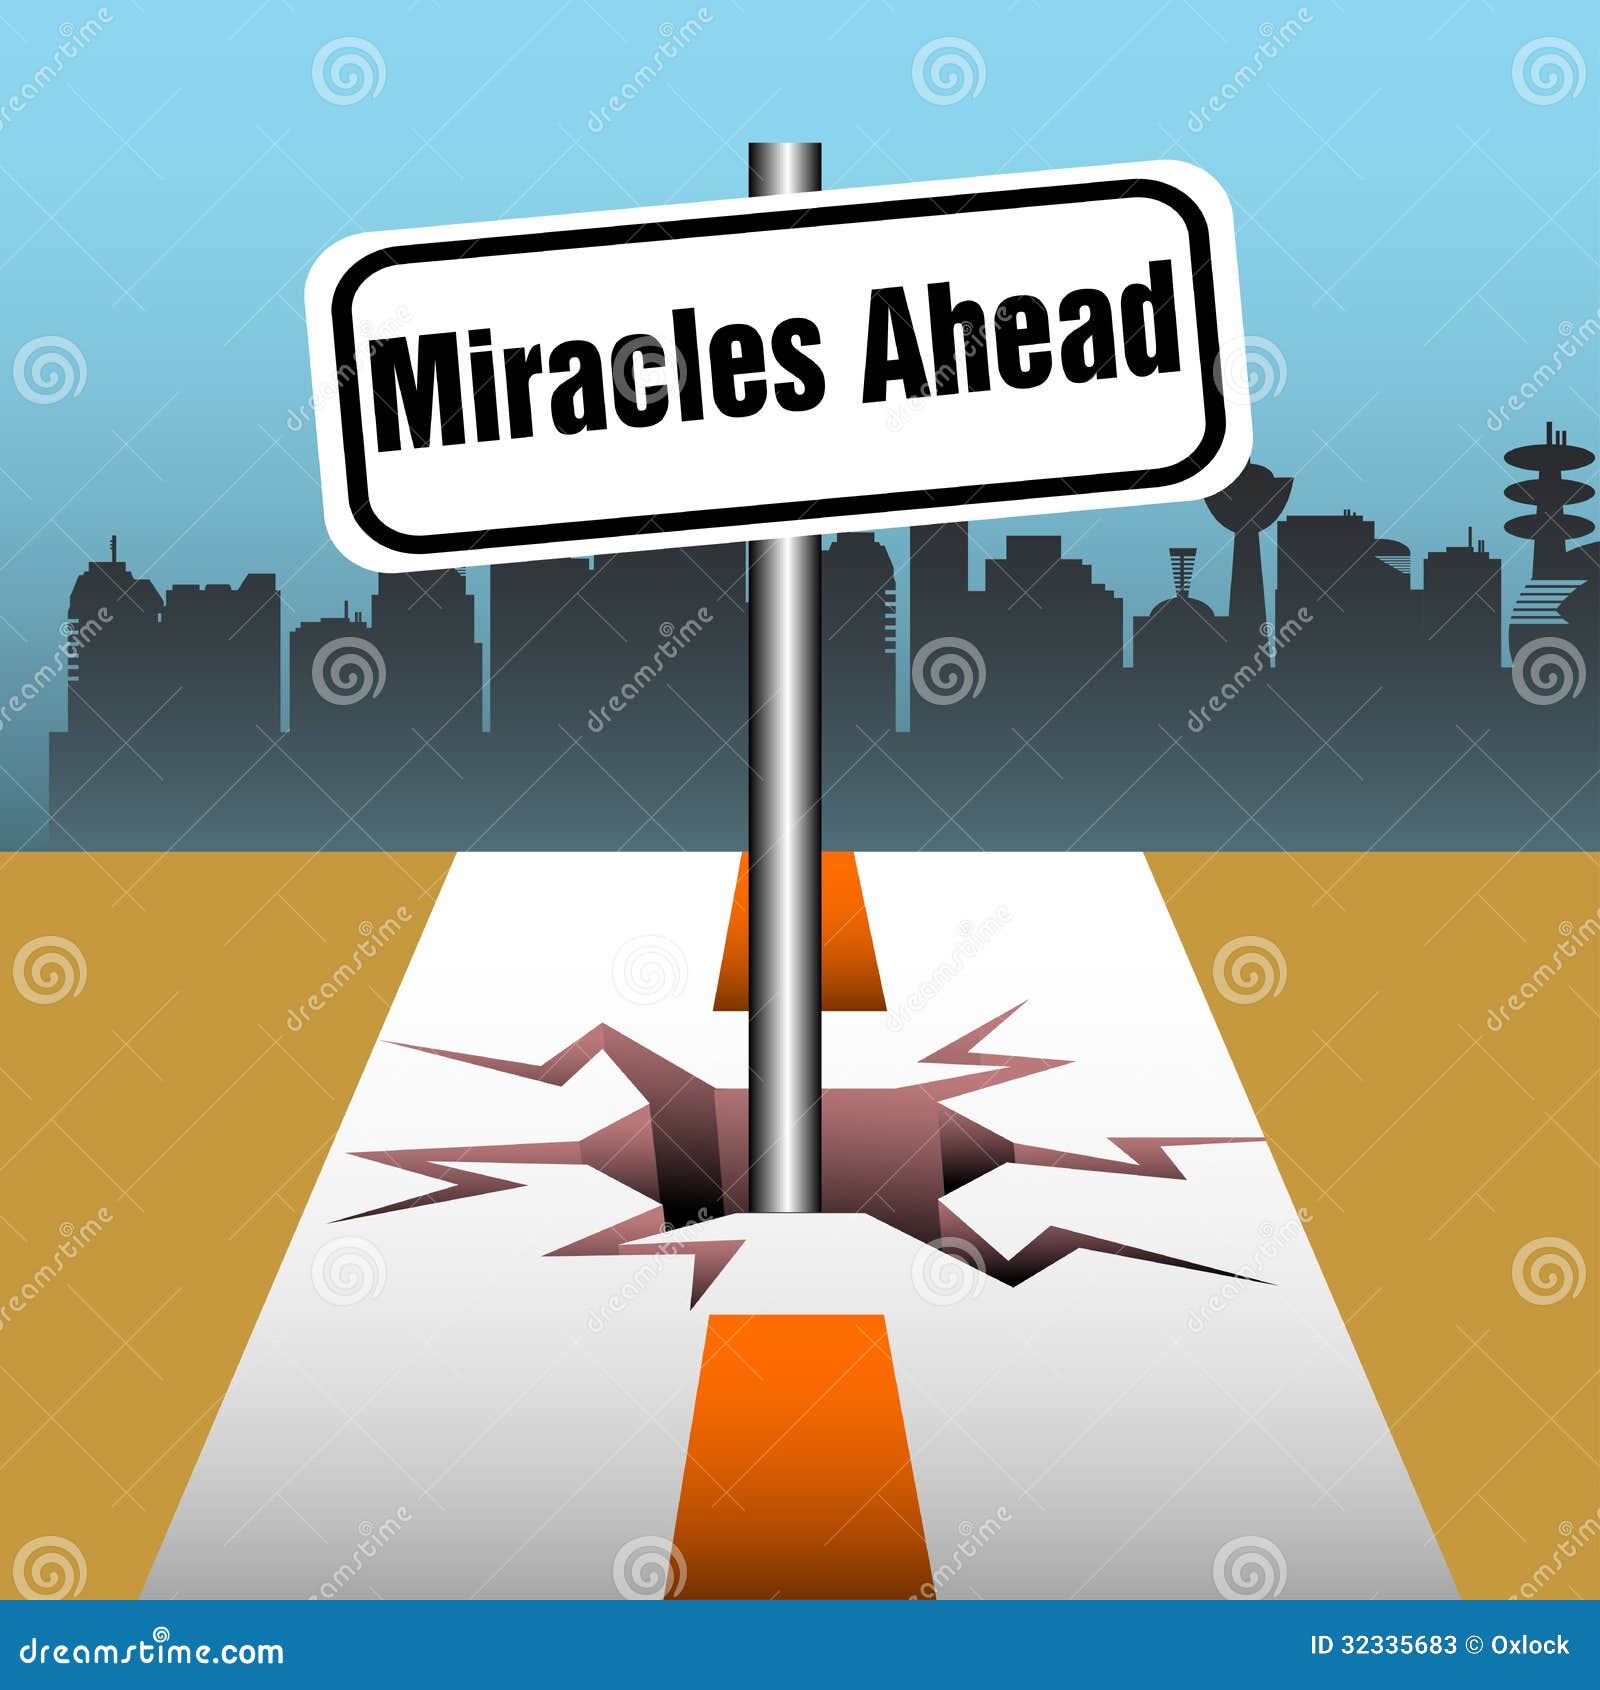 miracles ahead